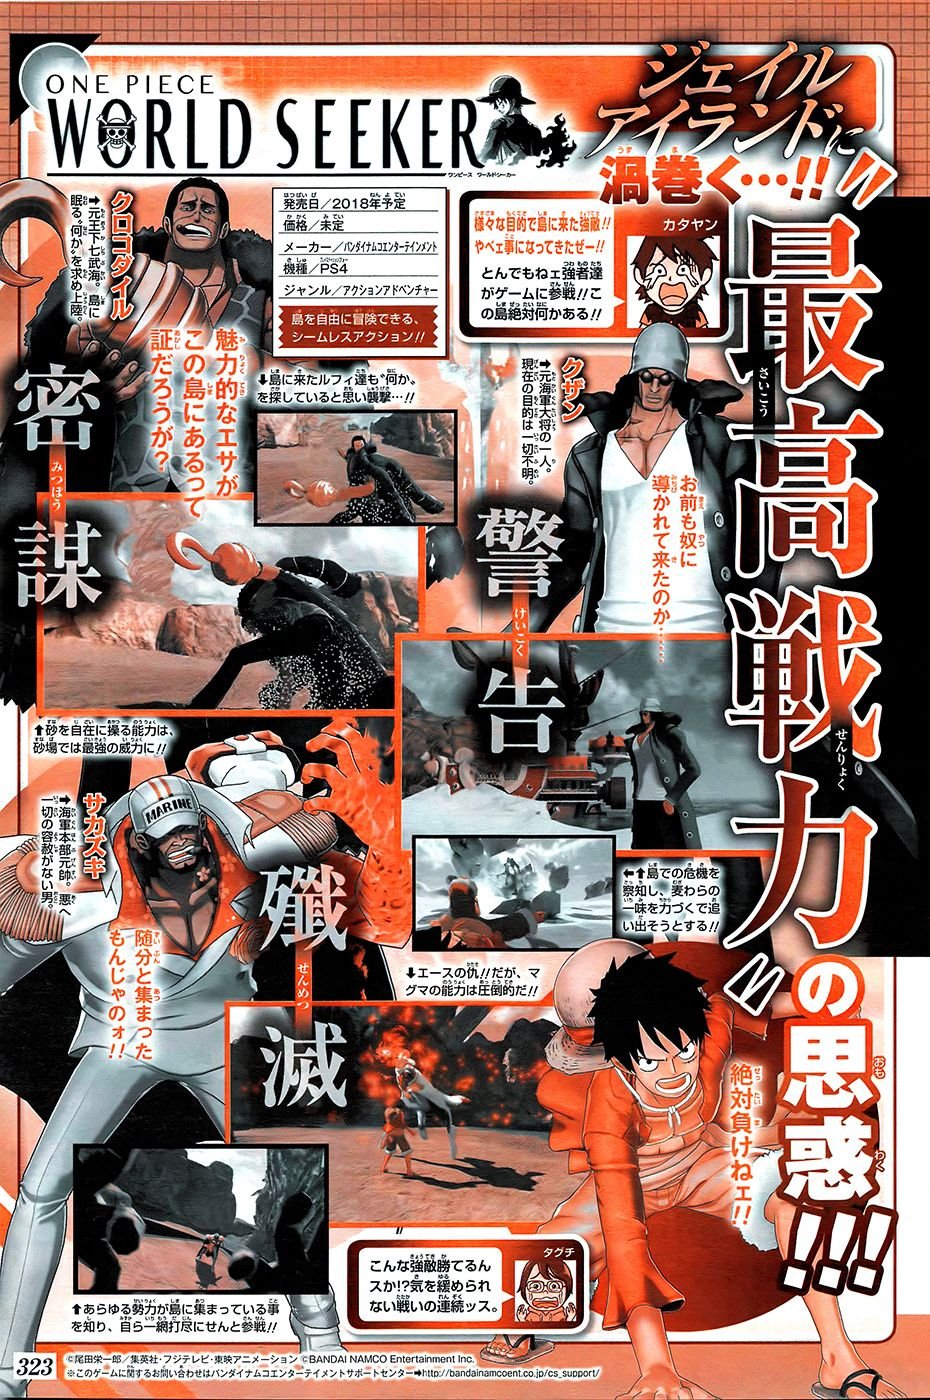 One-Piece-World-Seeker-scan-08-06-2018